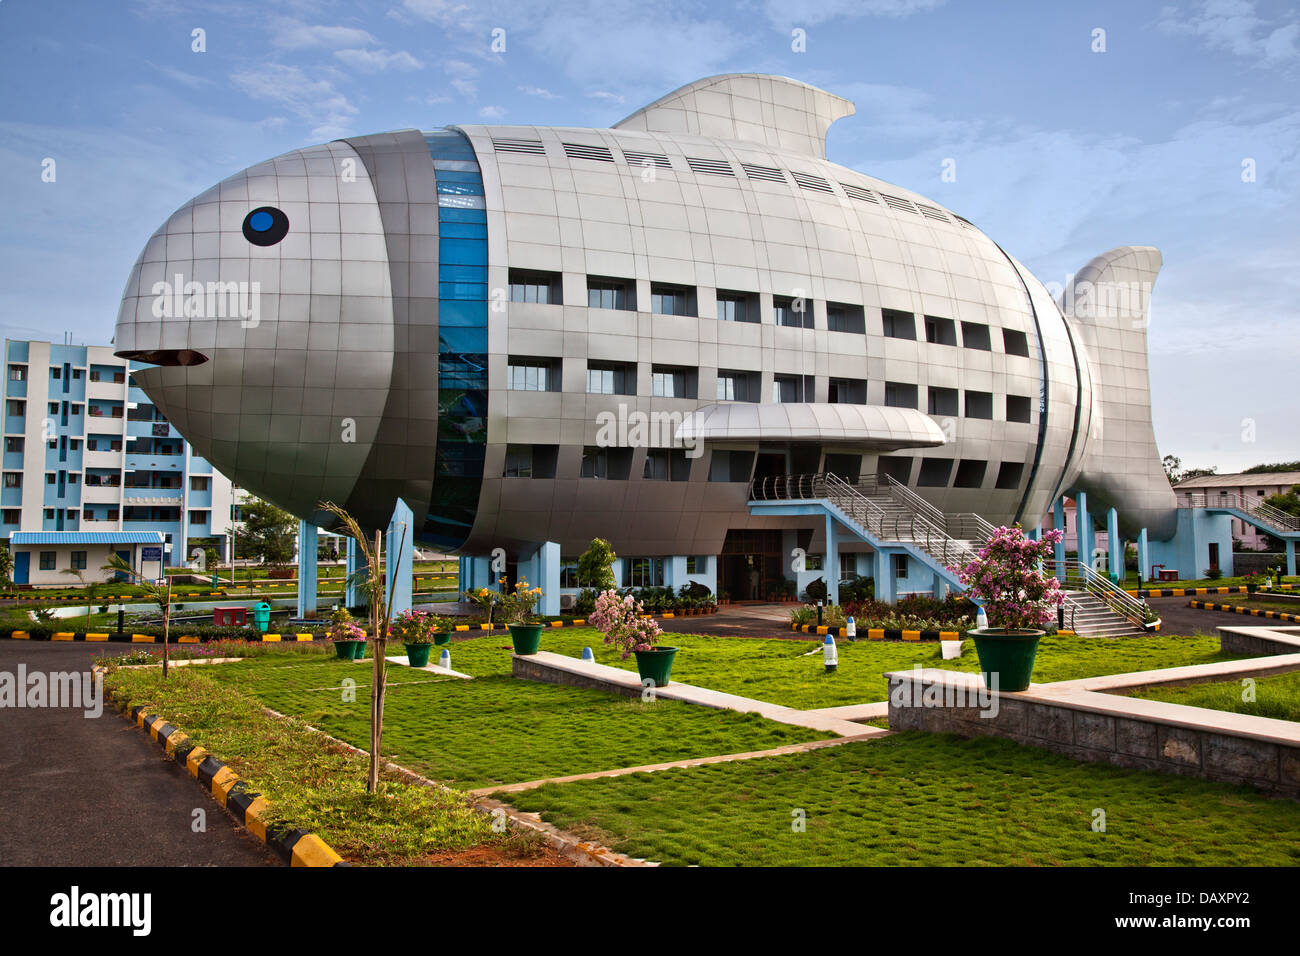 Façade d'un bâtiment, construction de poissons, Hyderabad, Andhra Pradesh, Inde Banque D'Images